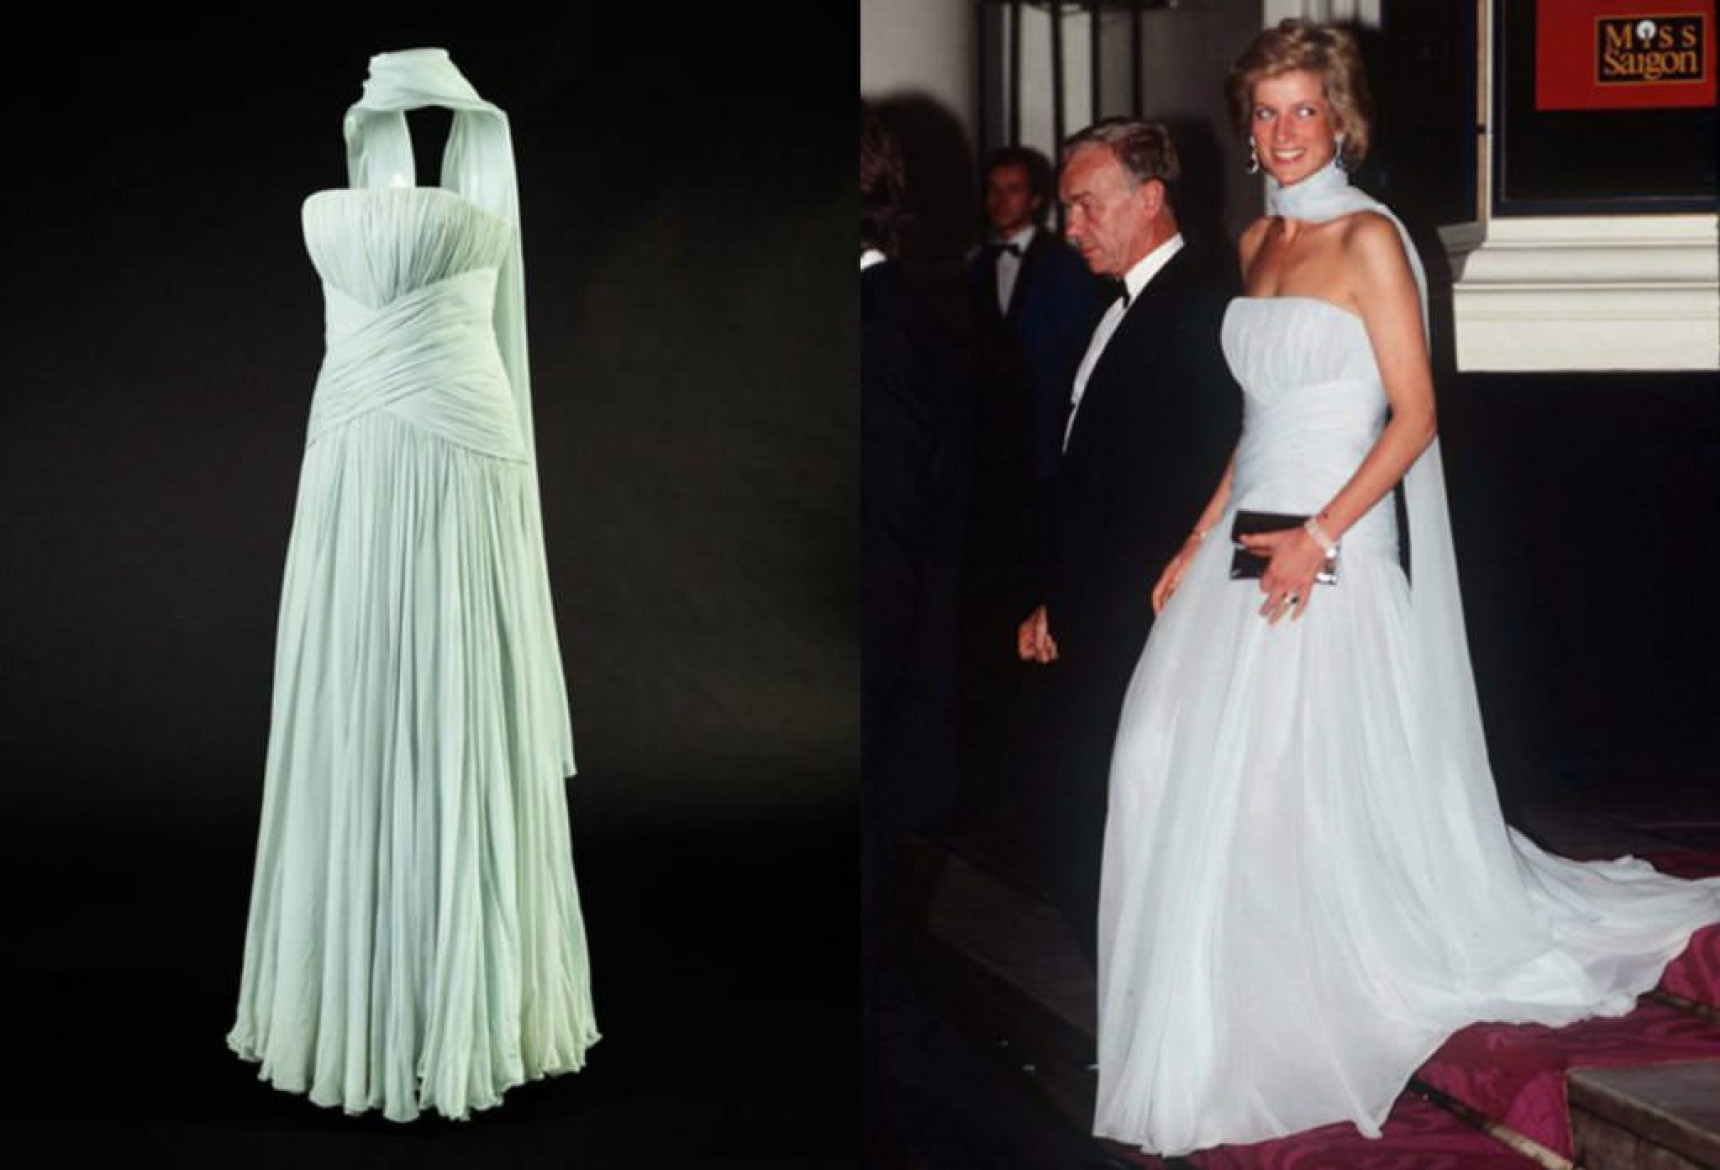 Princess Diana wearing a white dress